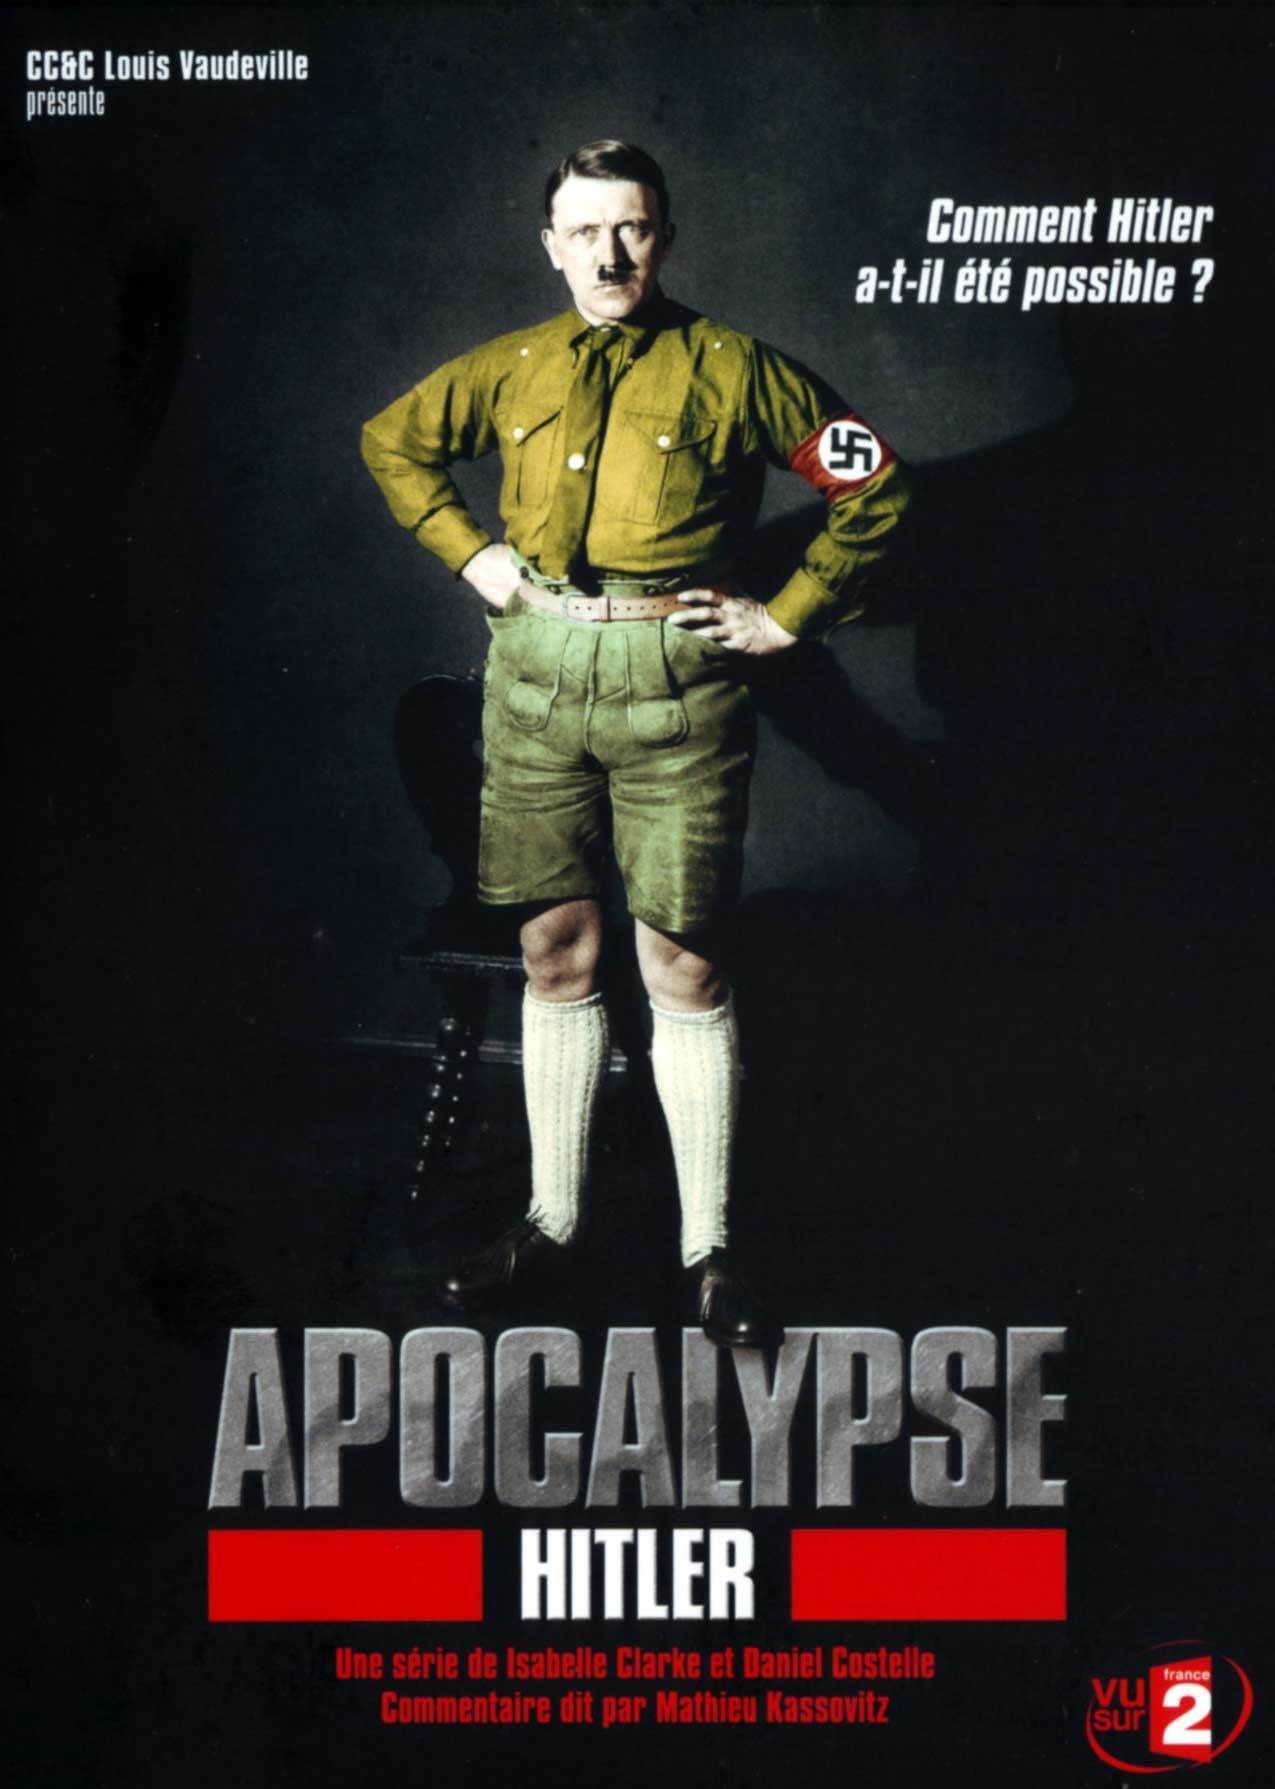 Apocalypse - Hitler (TV Mini-Series)